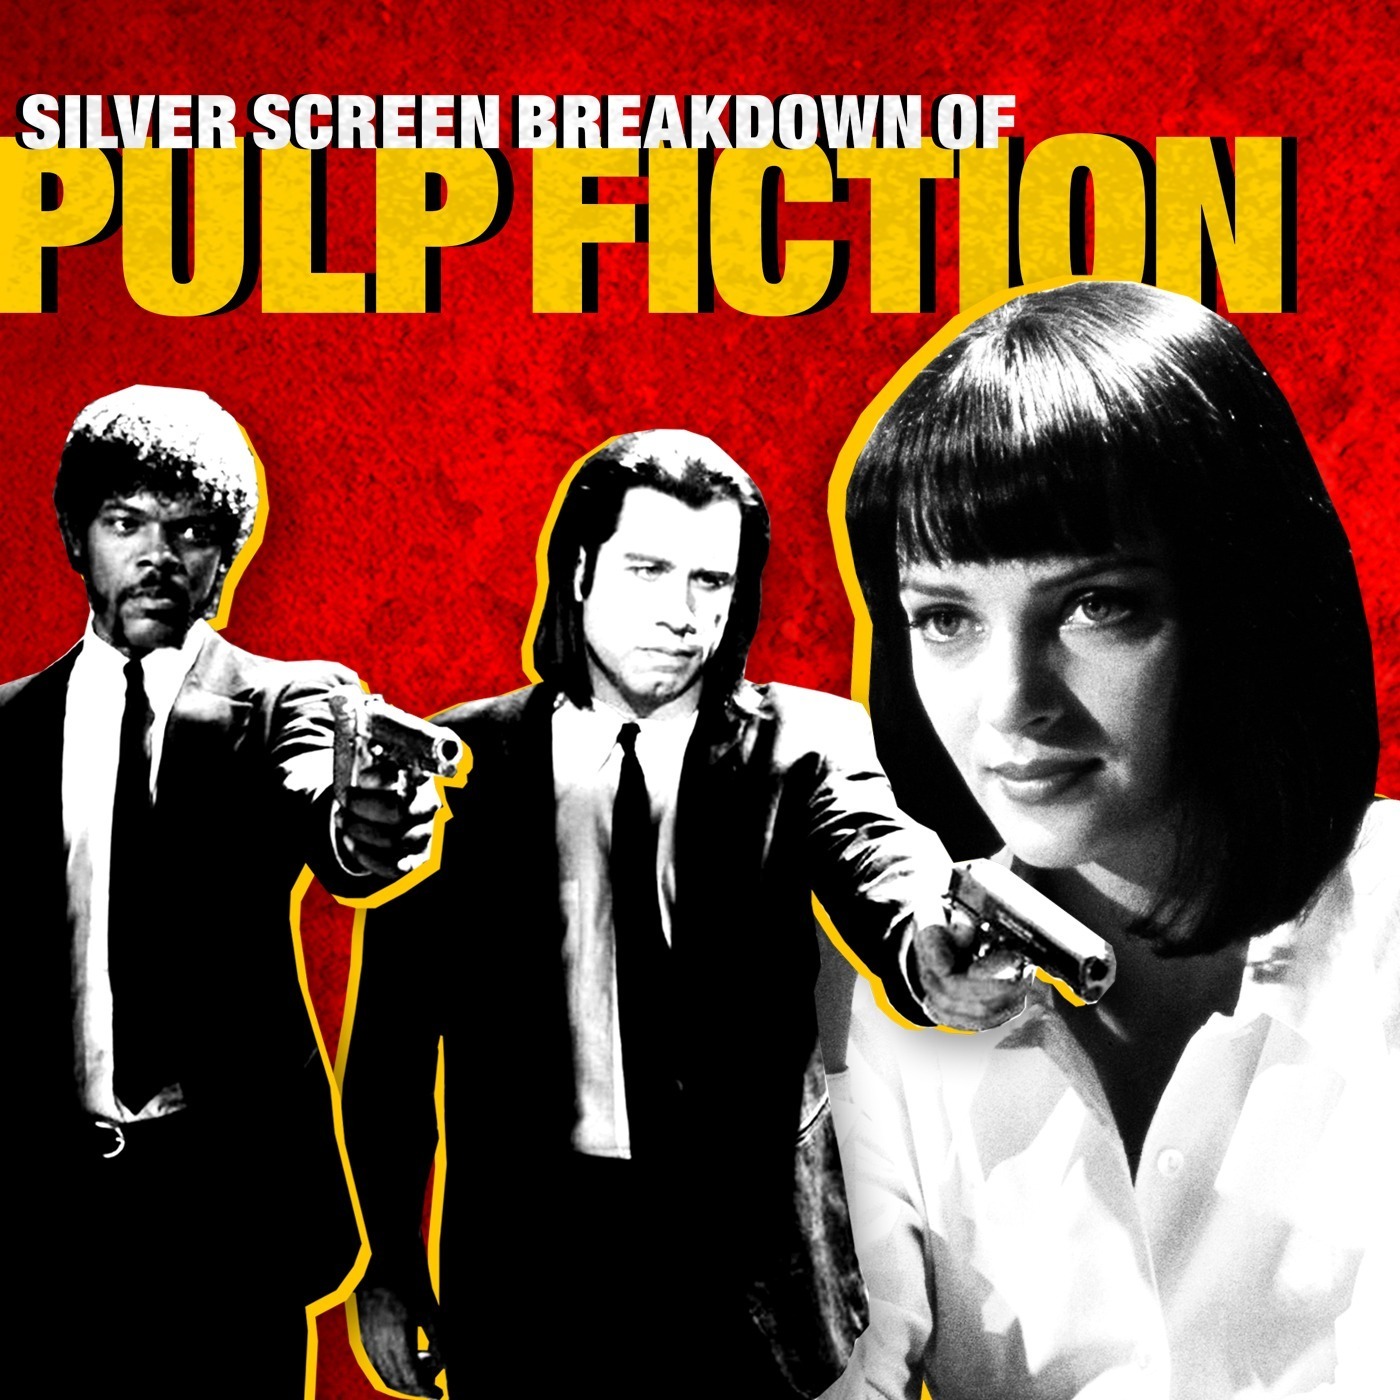 Pulp Fiction Breakdown Image